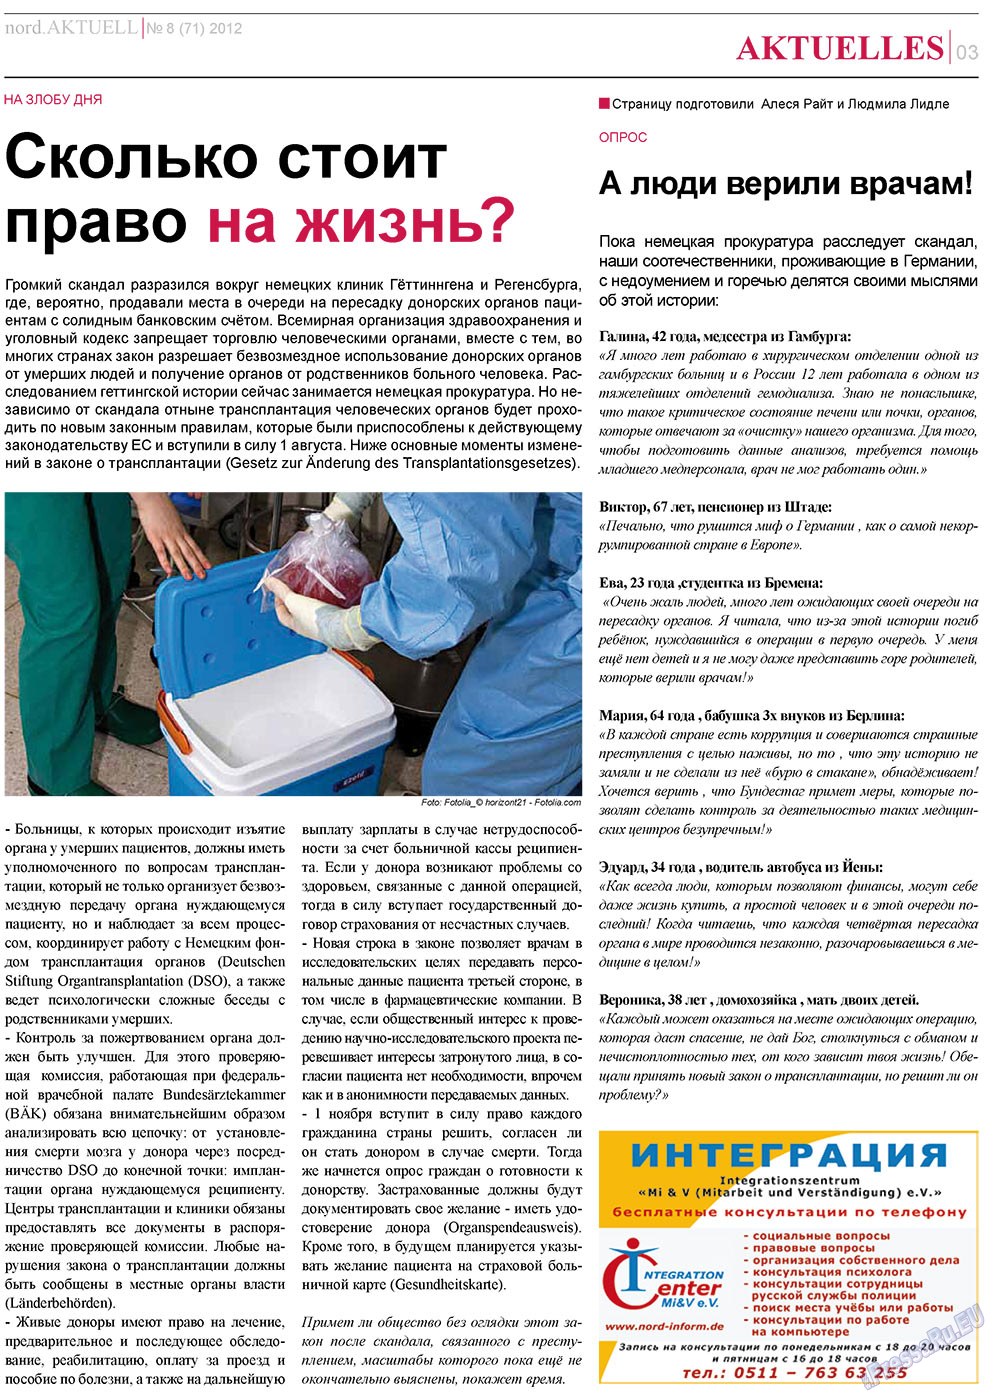 nord.Aktuell, газета. 2012 №8 стр.3